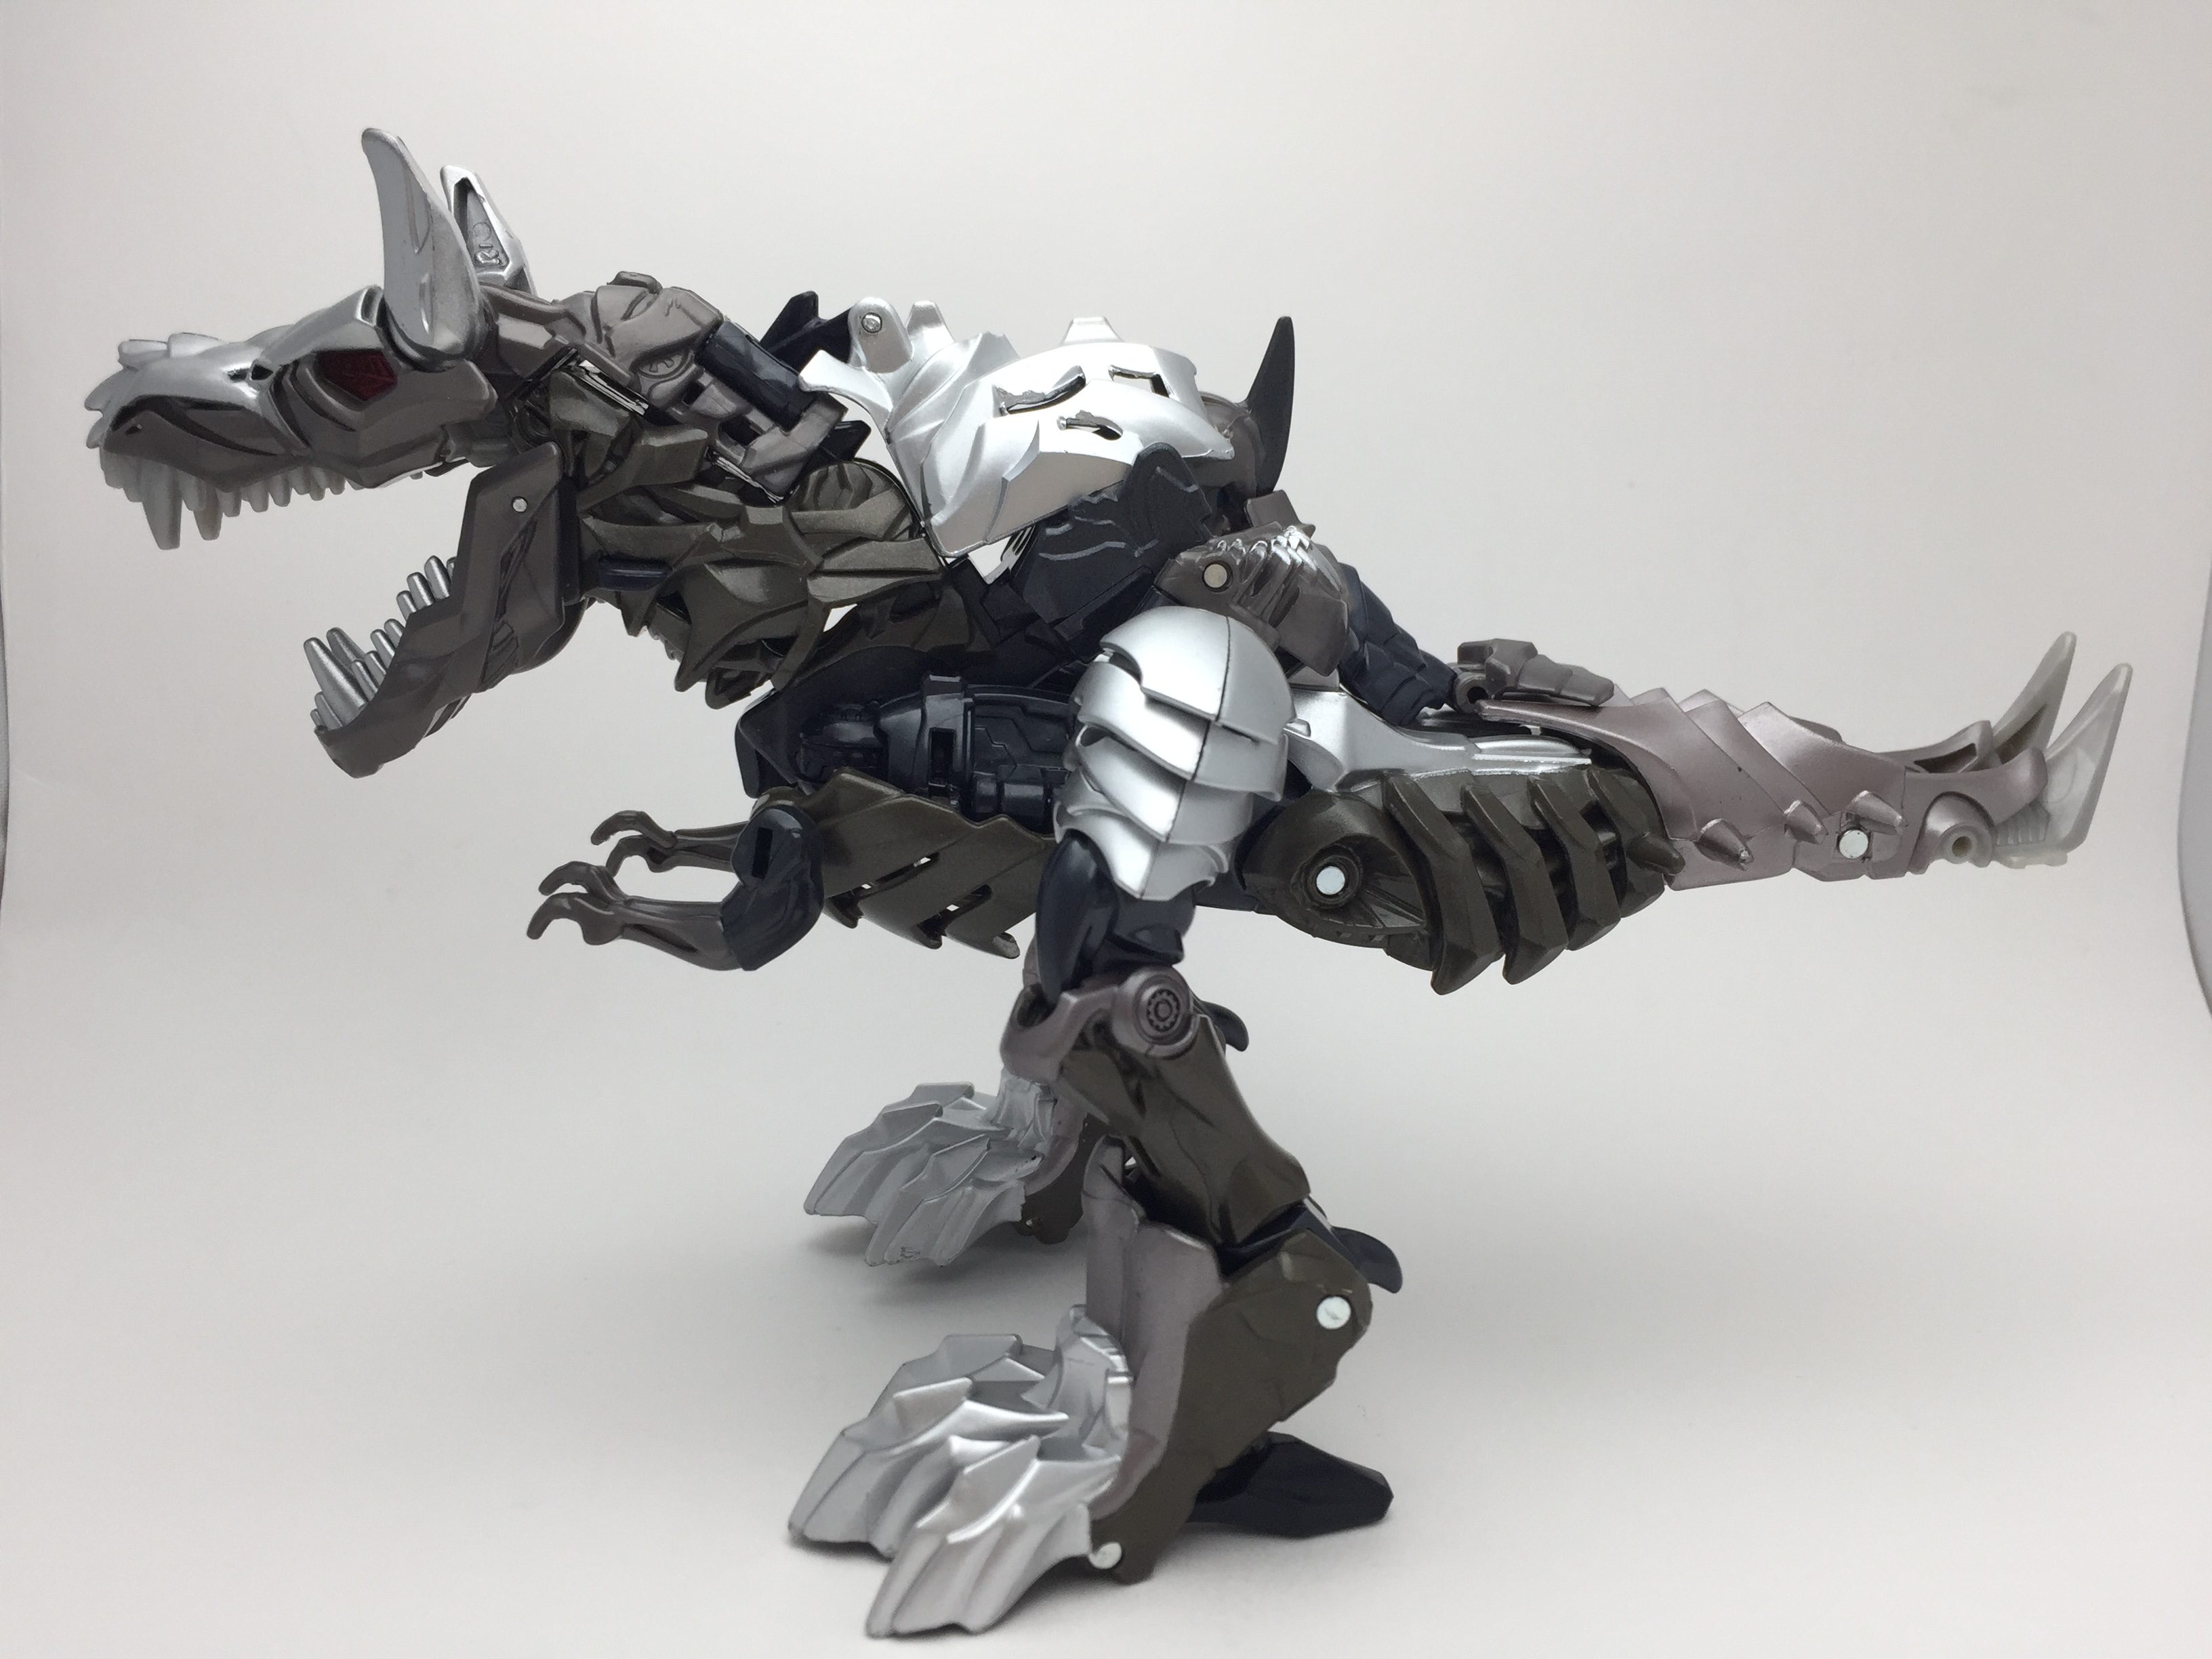 Grimlock, alternate mode. (Transformers: The Last Knight)